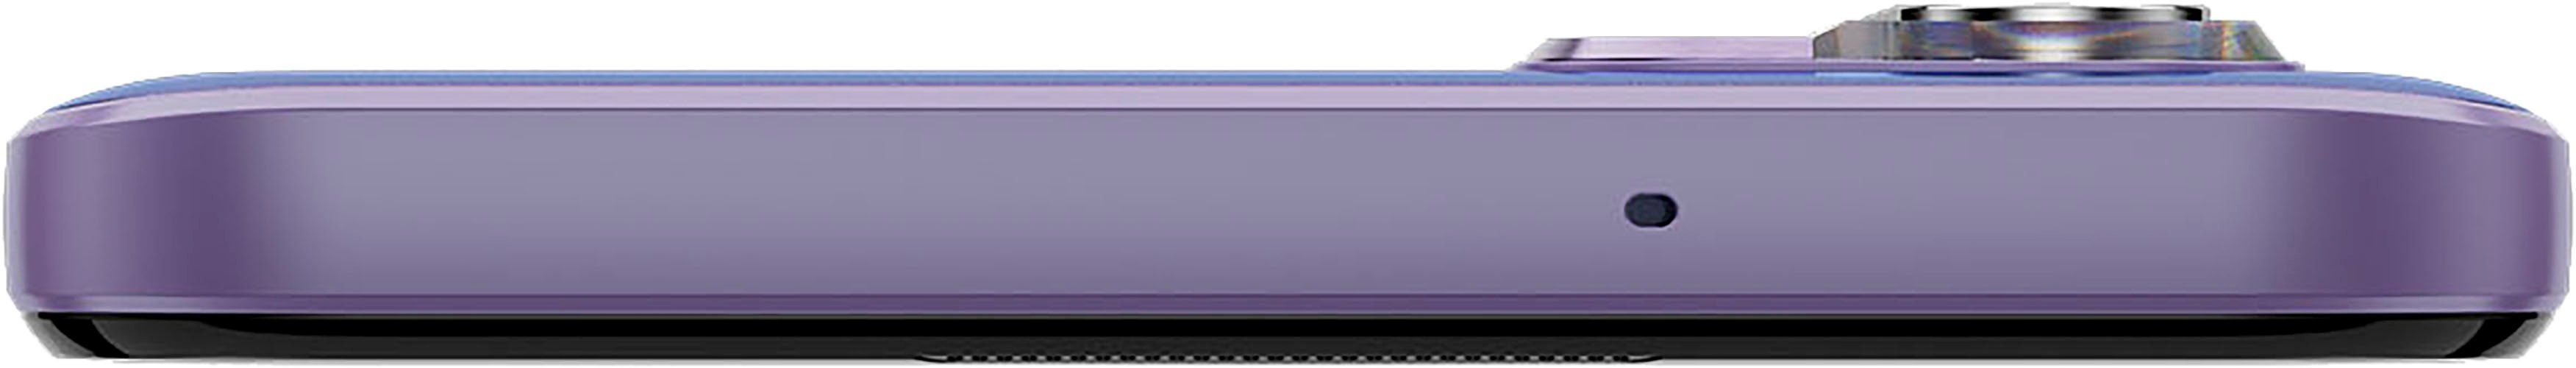 Zoll, GB Speicherplatz, 128 (16,9 purple Kamera) G42 Smartphone MP 50 Nokia cm/6,65